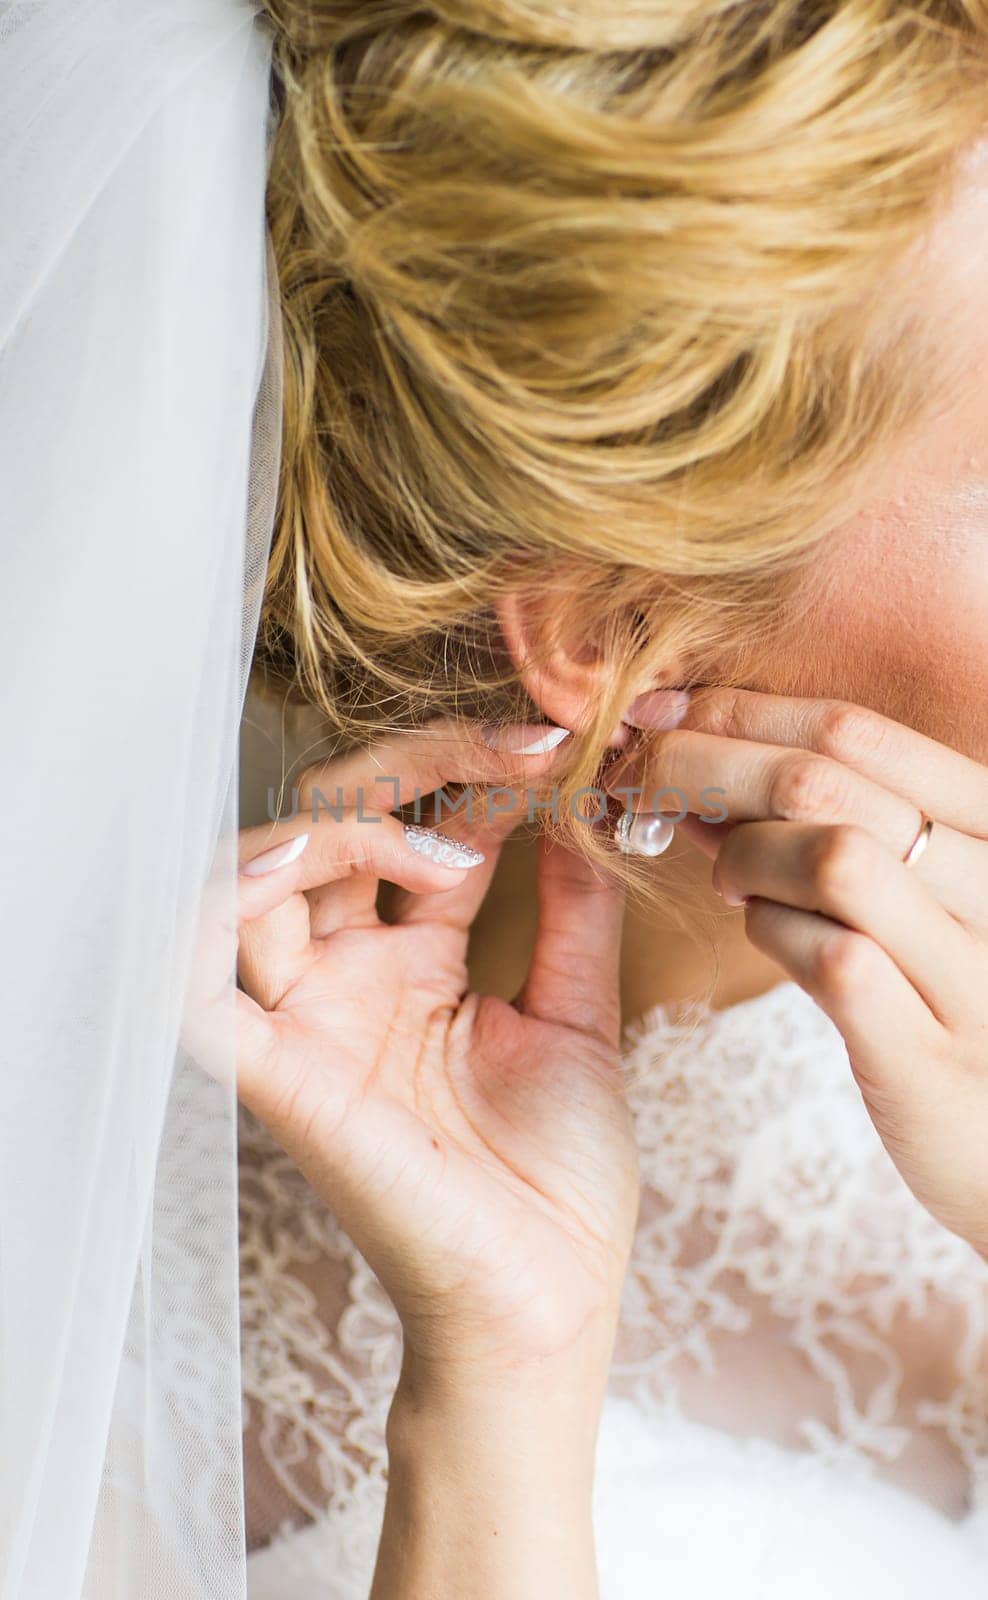 close-up of beautiful woman wearing shiny diamond earrings by Satura86